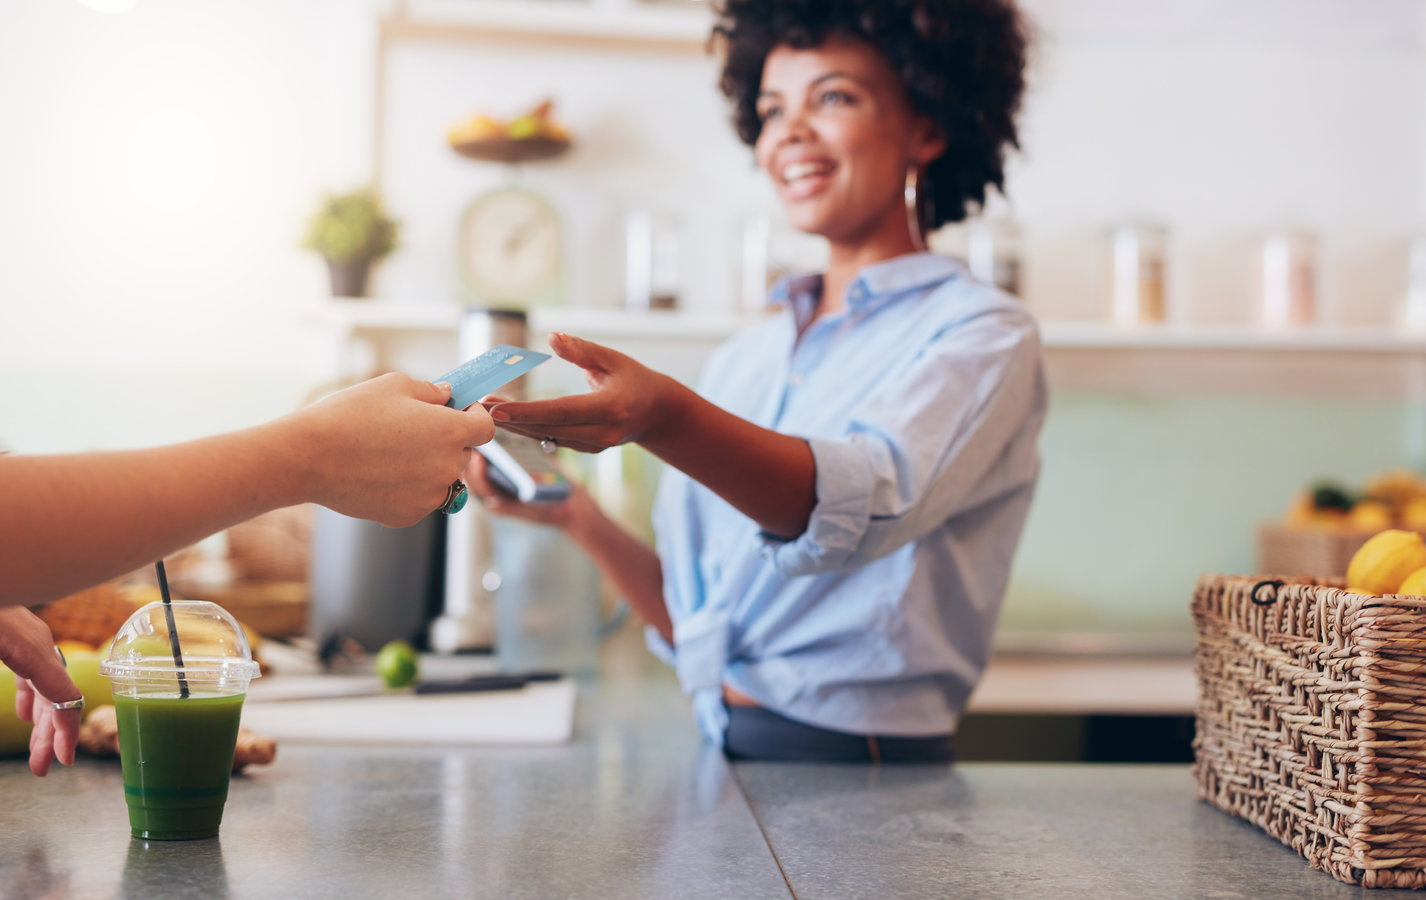 Clerk handing credit card to customer after transaction